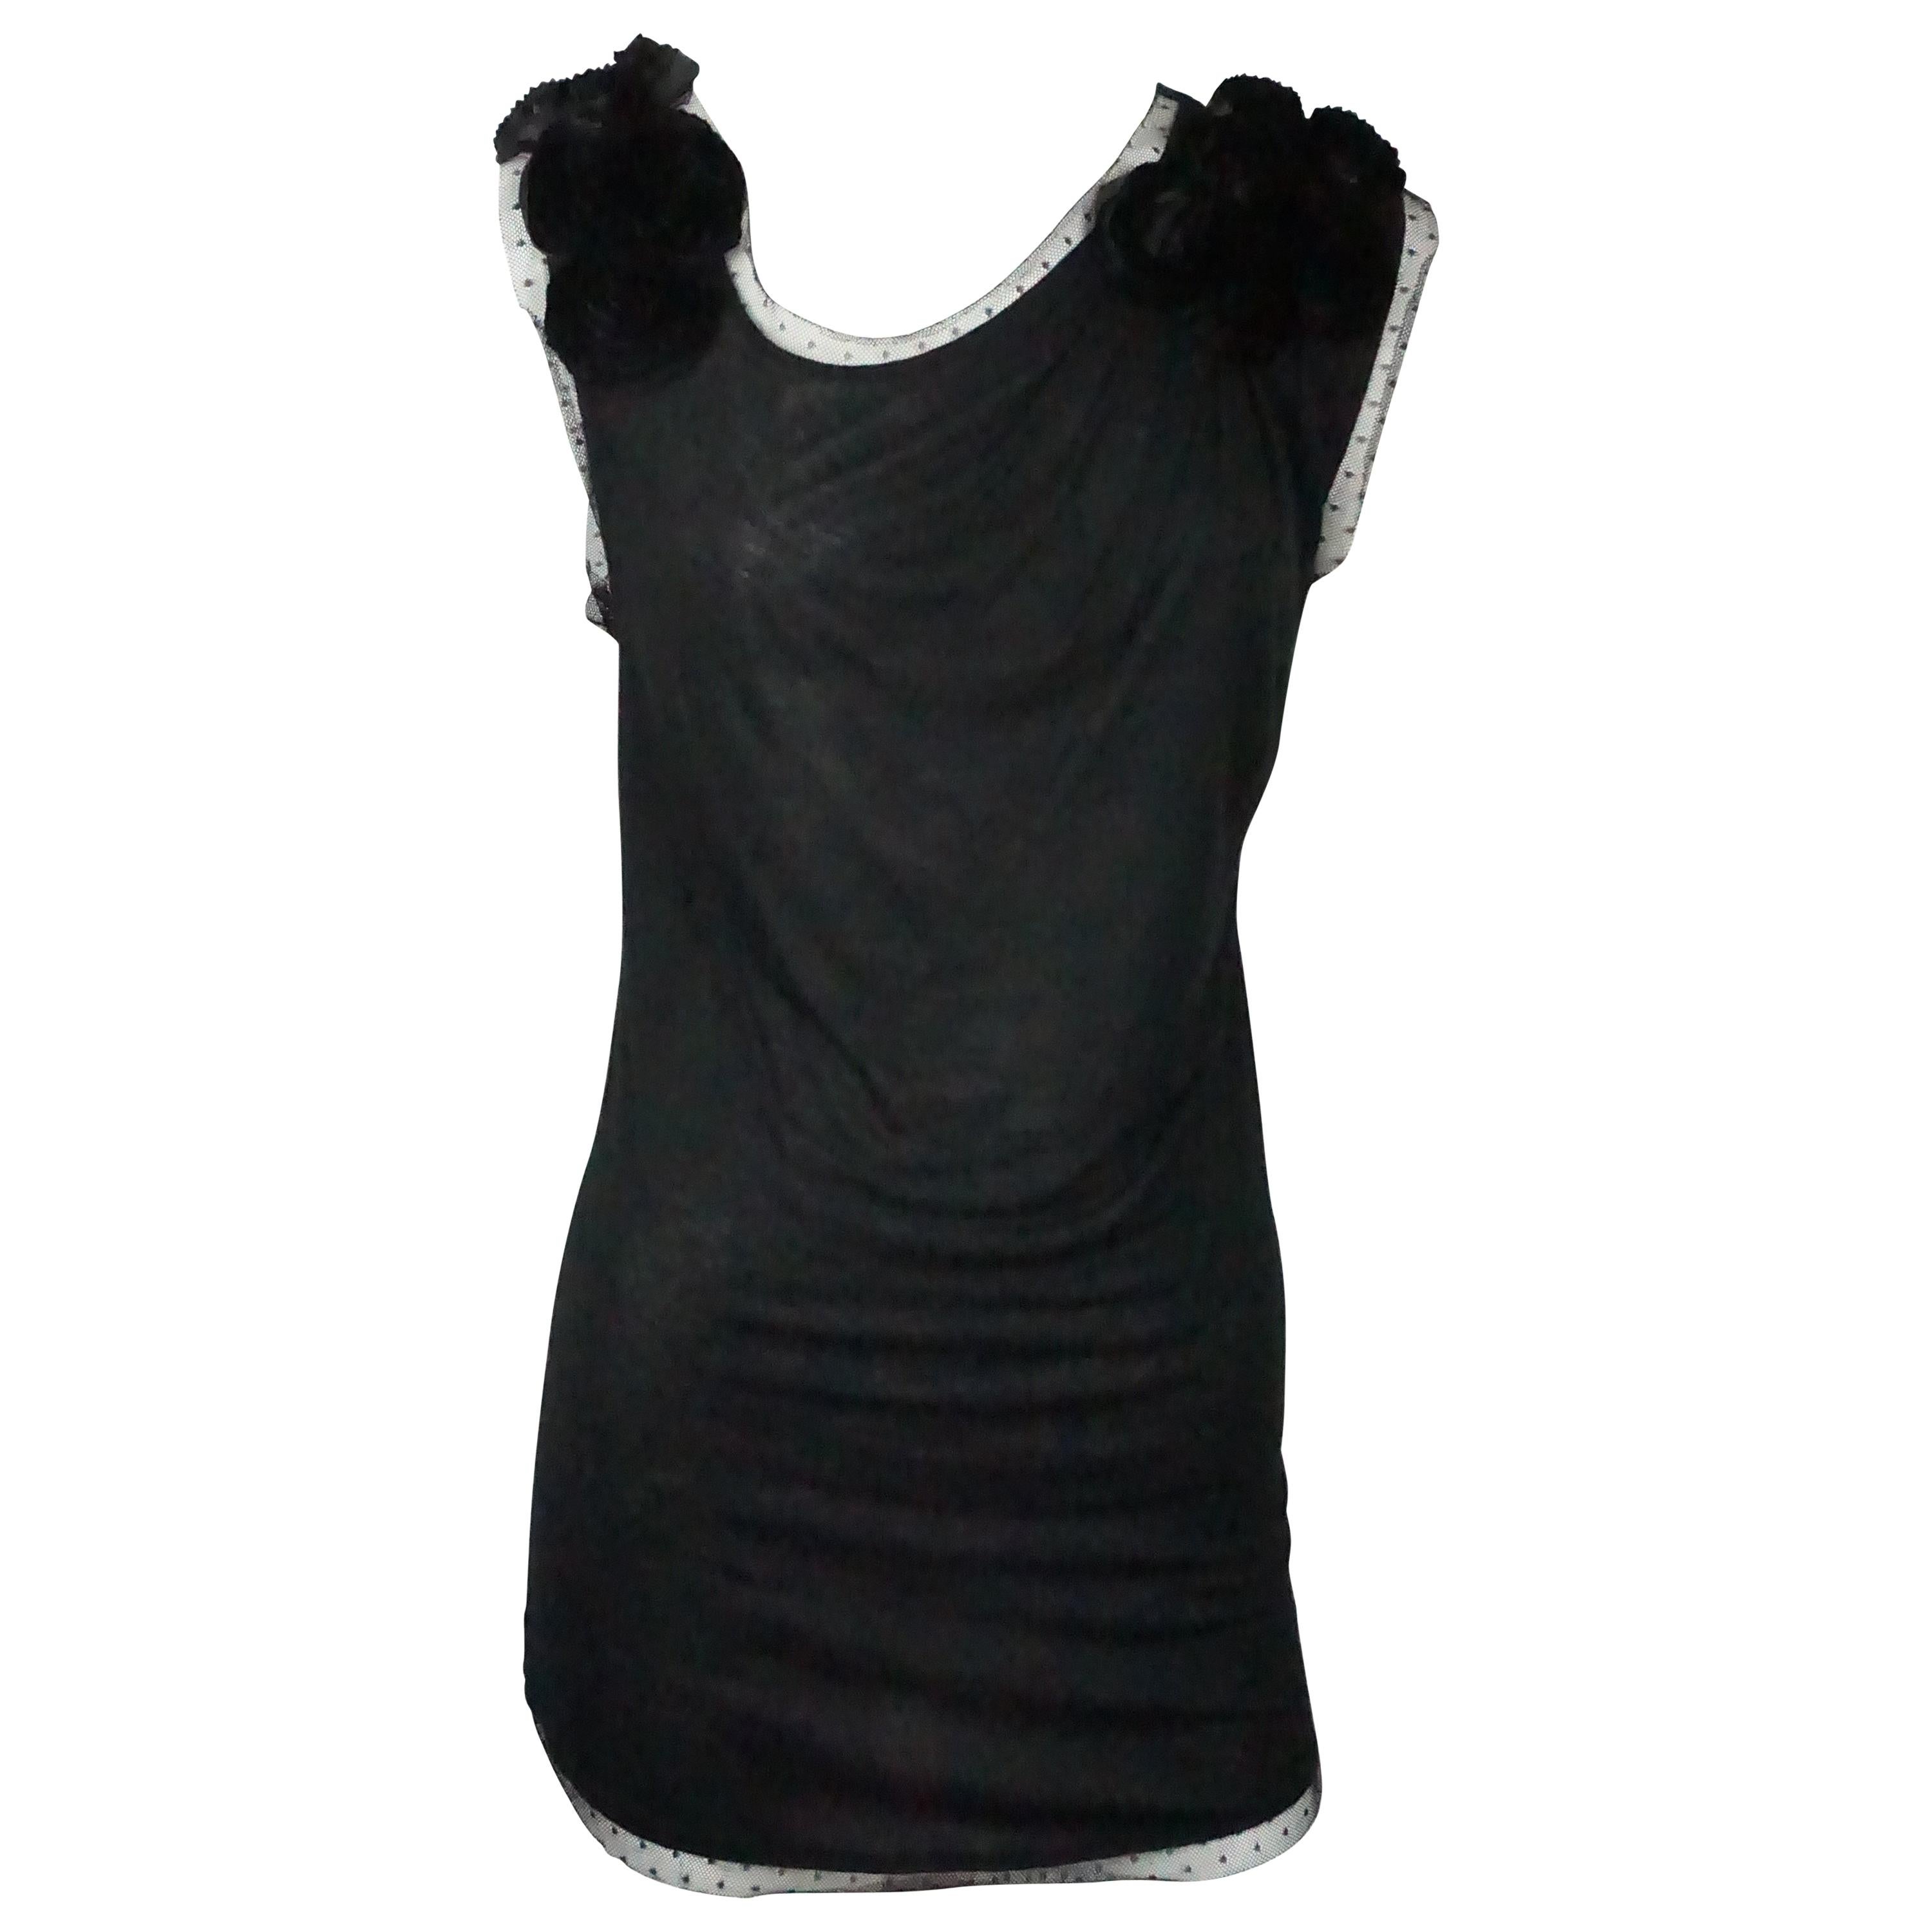 Valentino Black Jersey Sleeveless Top w/ Floral Detail - Medium 